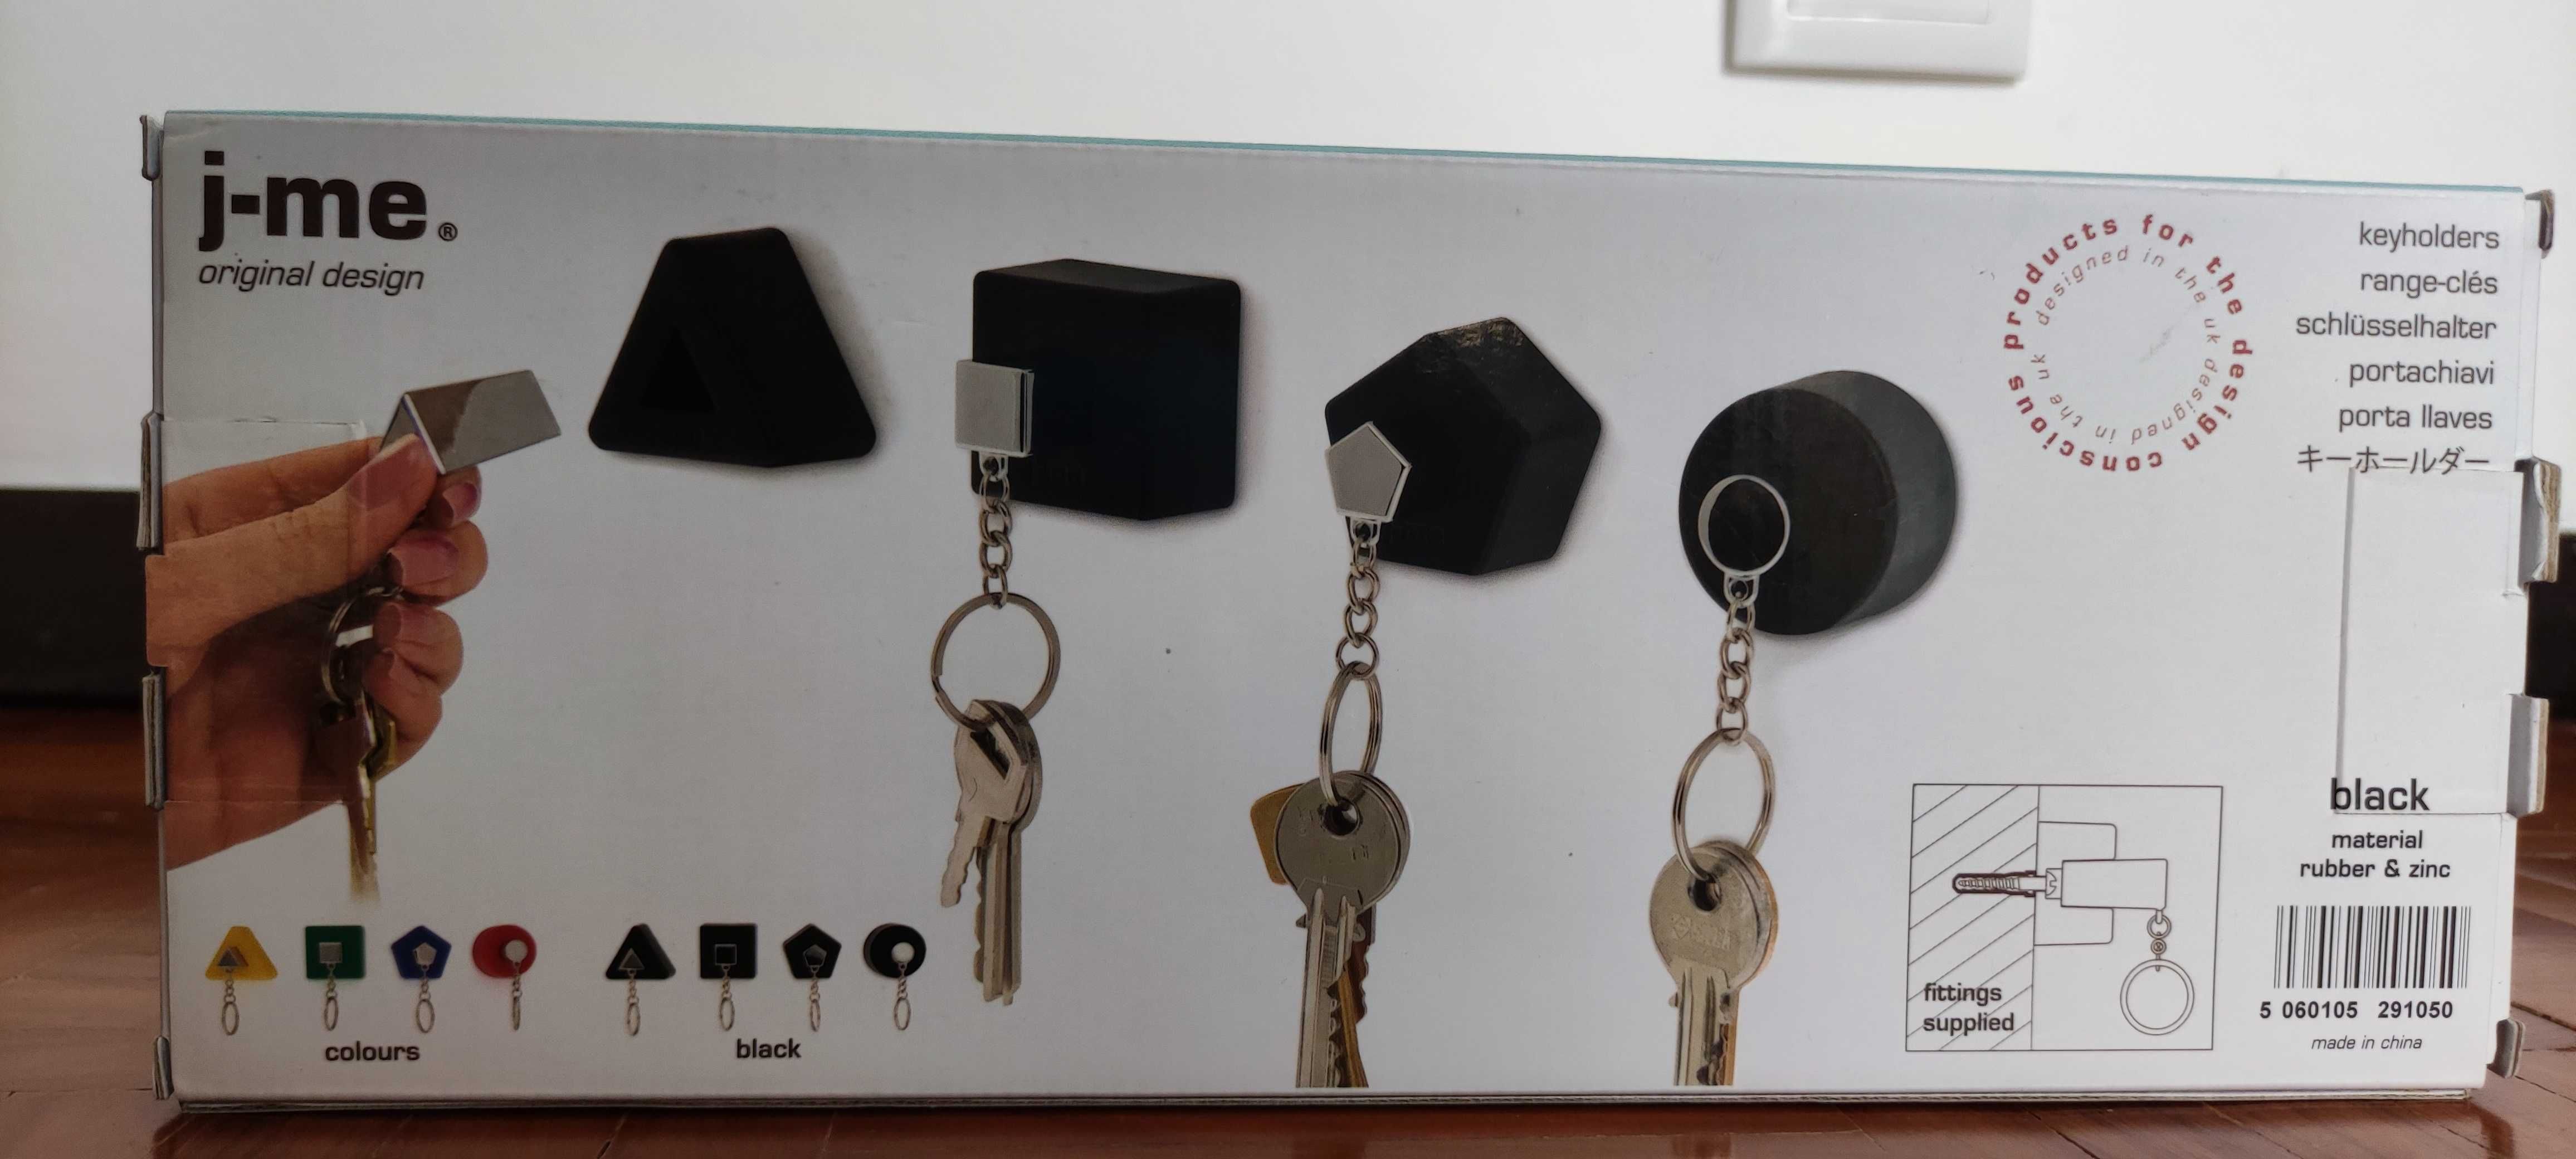 Kit porta-chaves magnético com formas geométricas